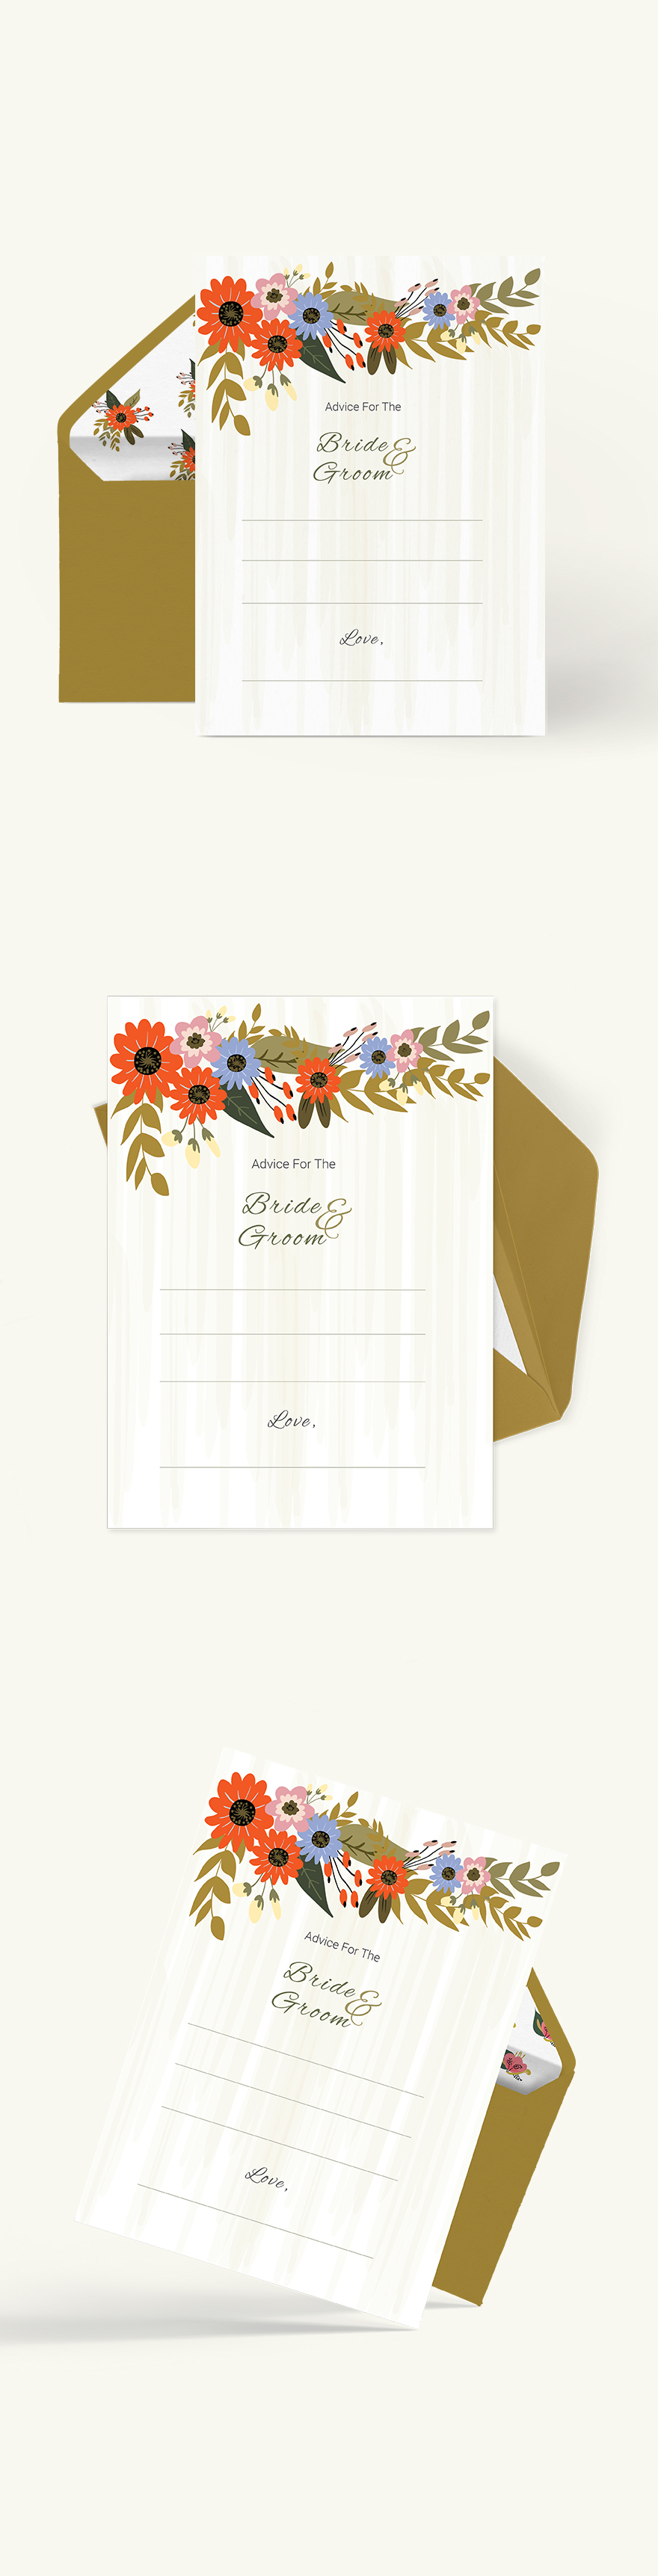 Free Small Flower Wedding Advice Card Template